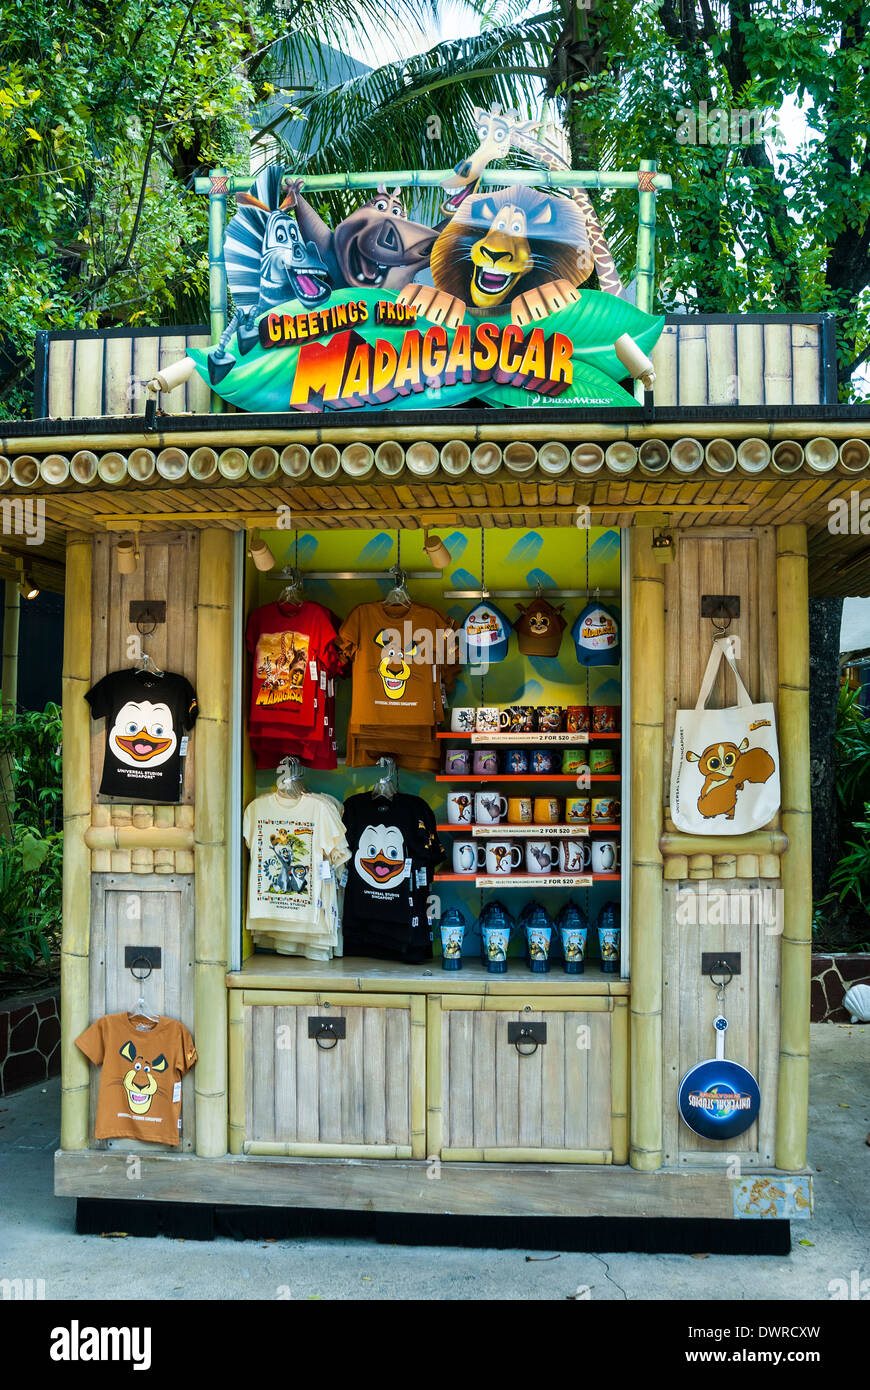 Madagascar merchandise, Universal Studios, Singapore Foto Stock